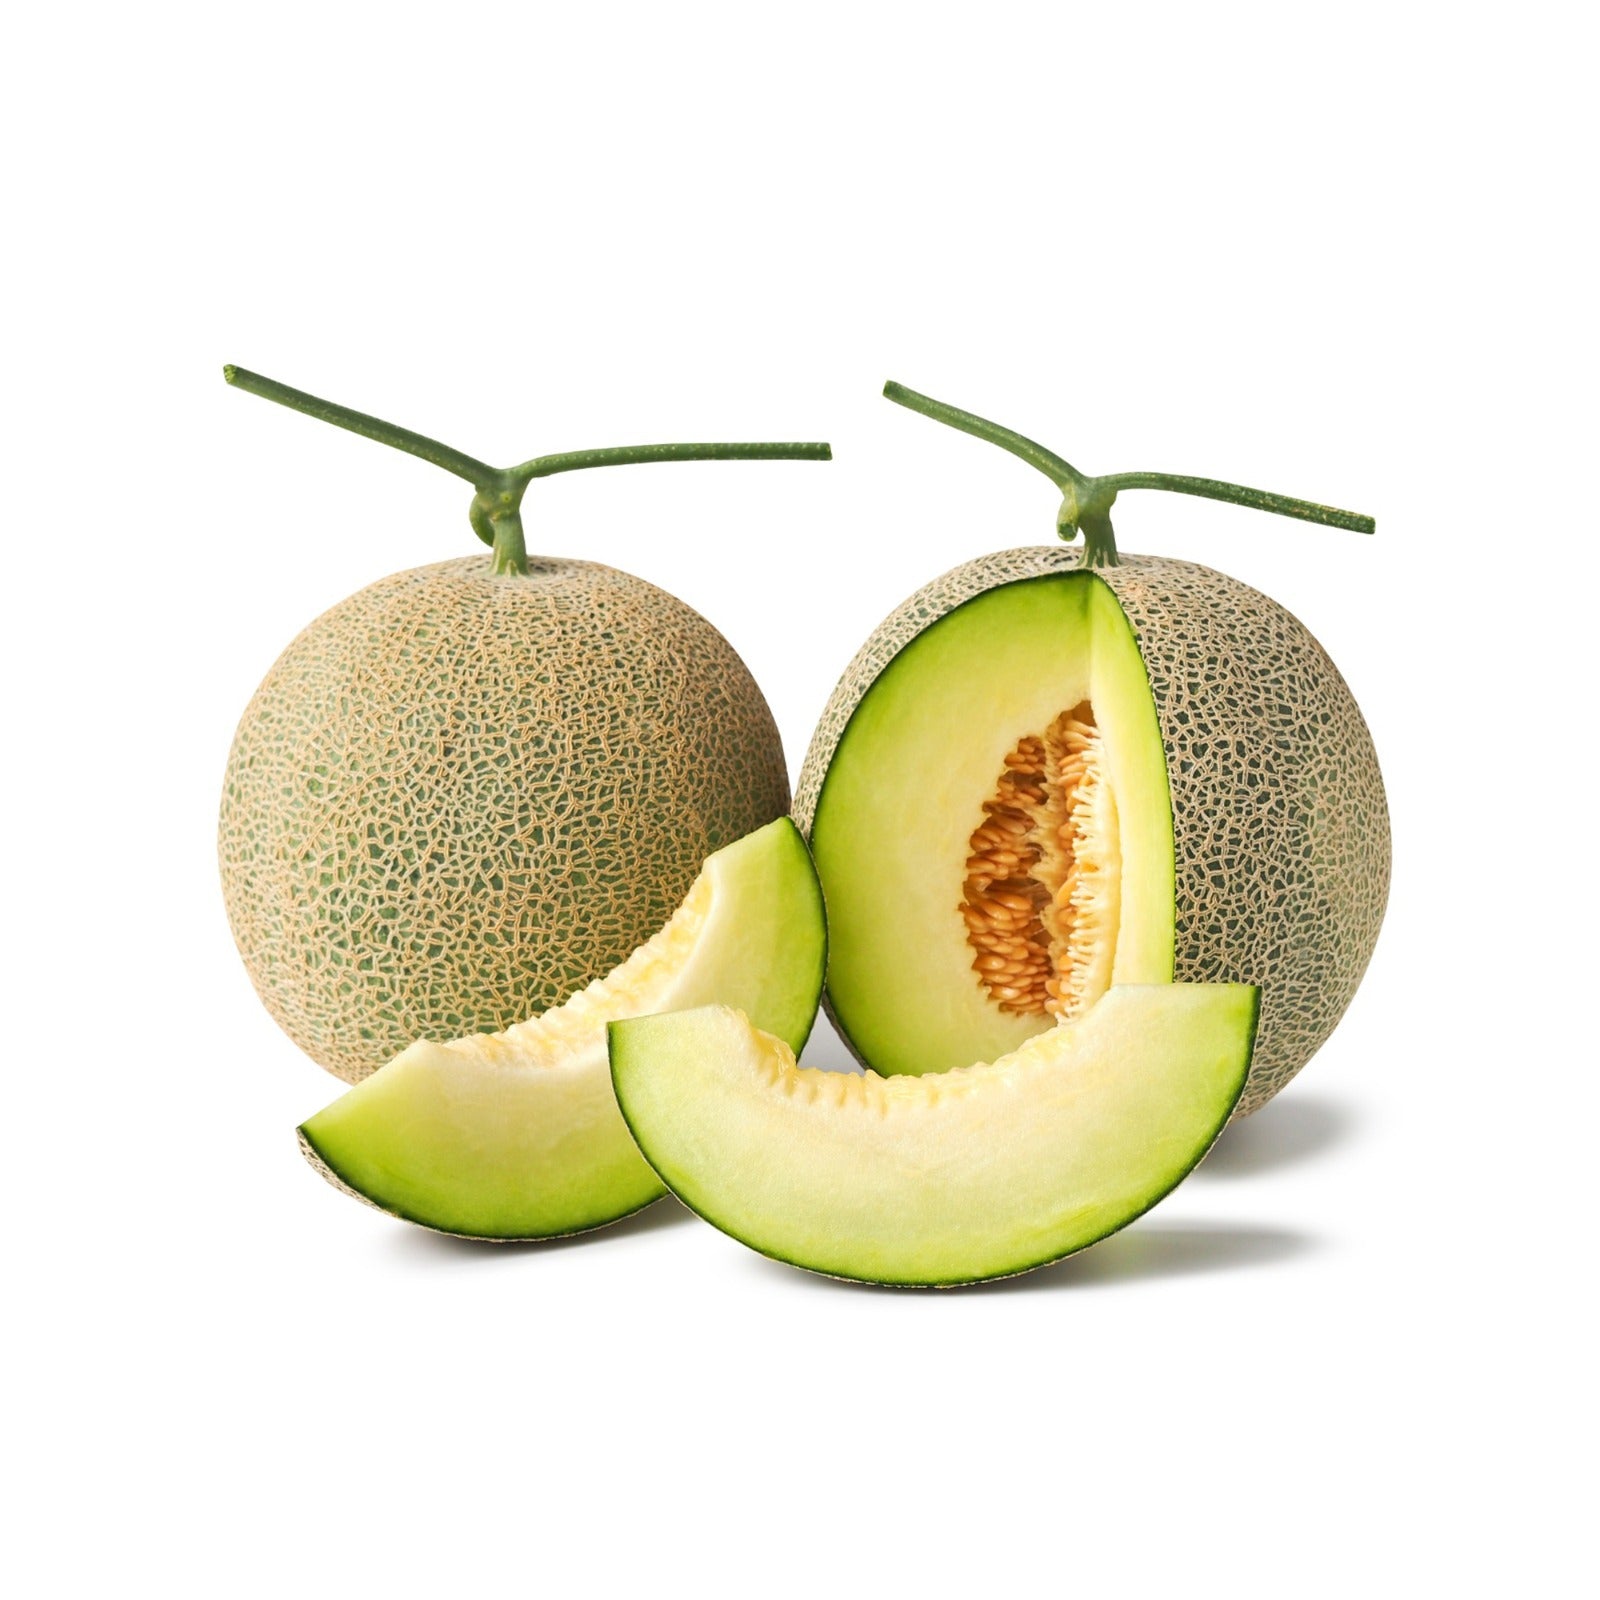 Melon - Rock Green Cantaloupe | Exotic Fruits - Rare & Tropical Exotic Fruit Shop UK